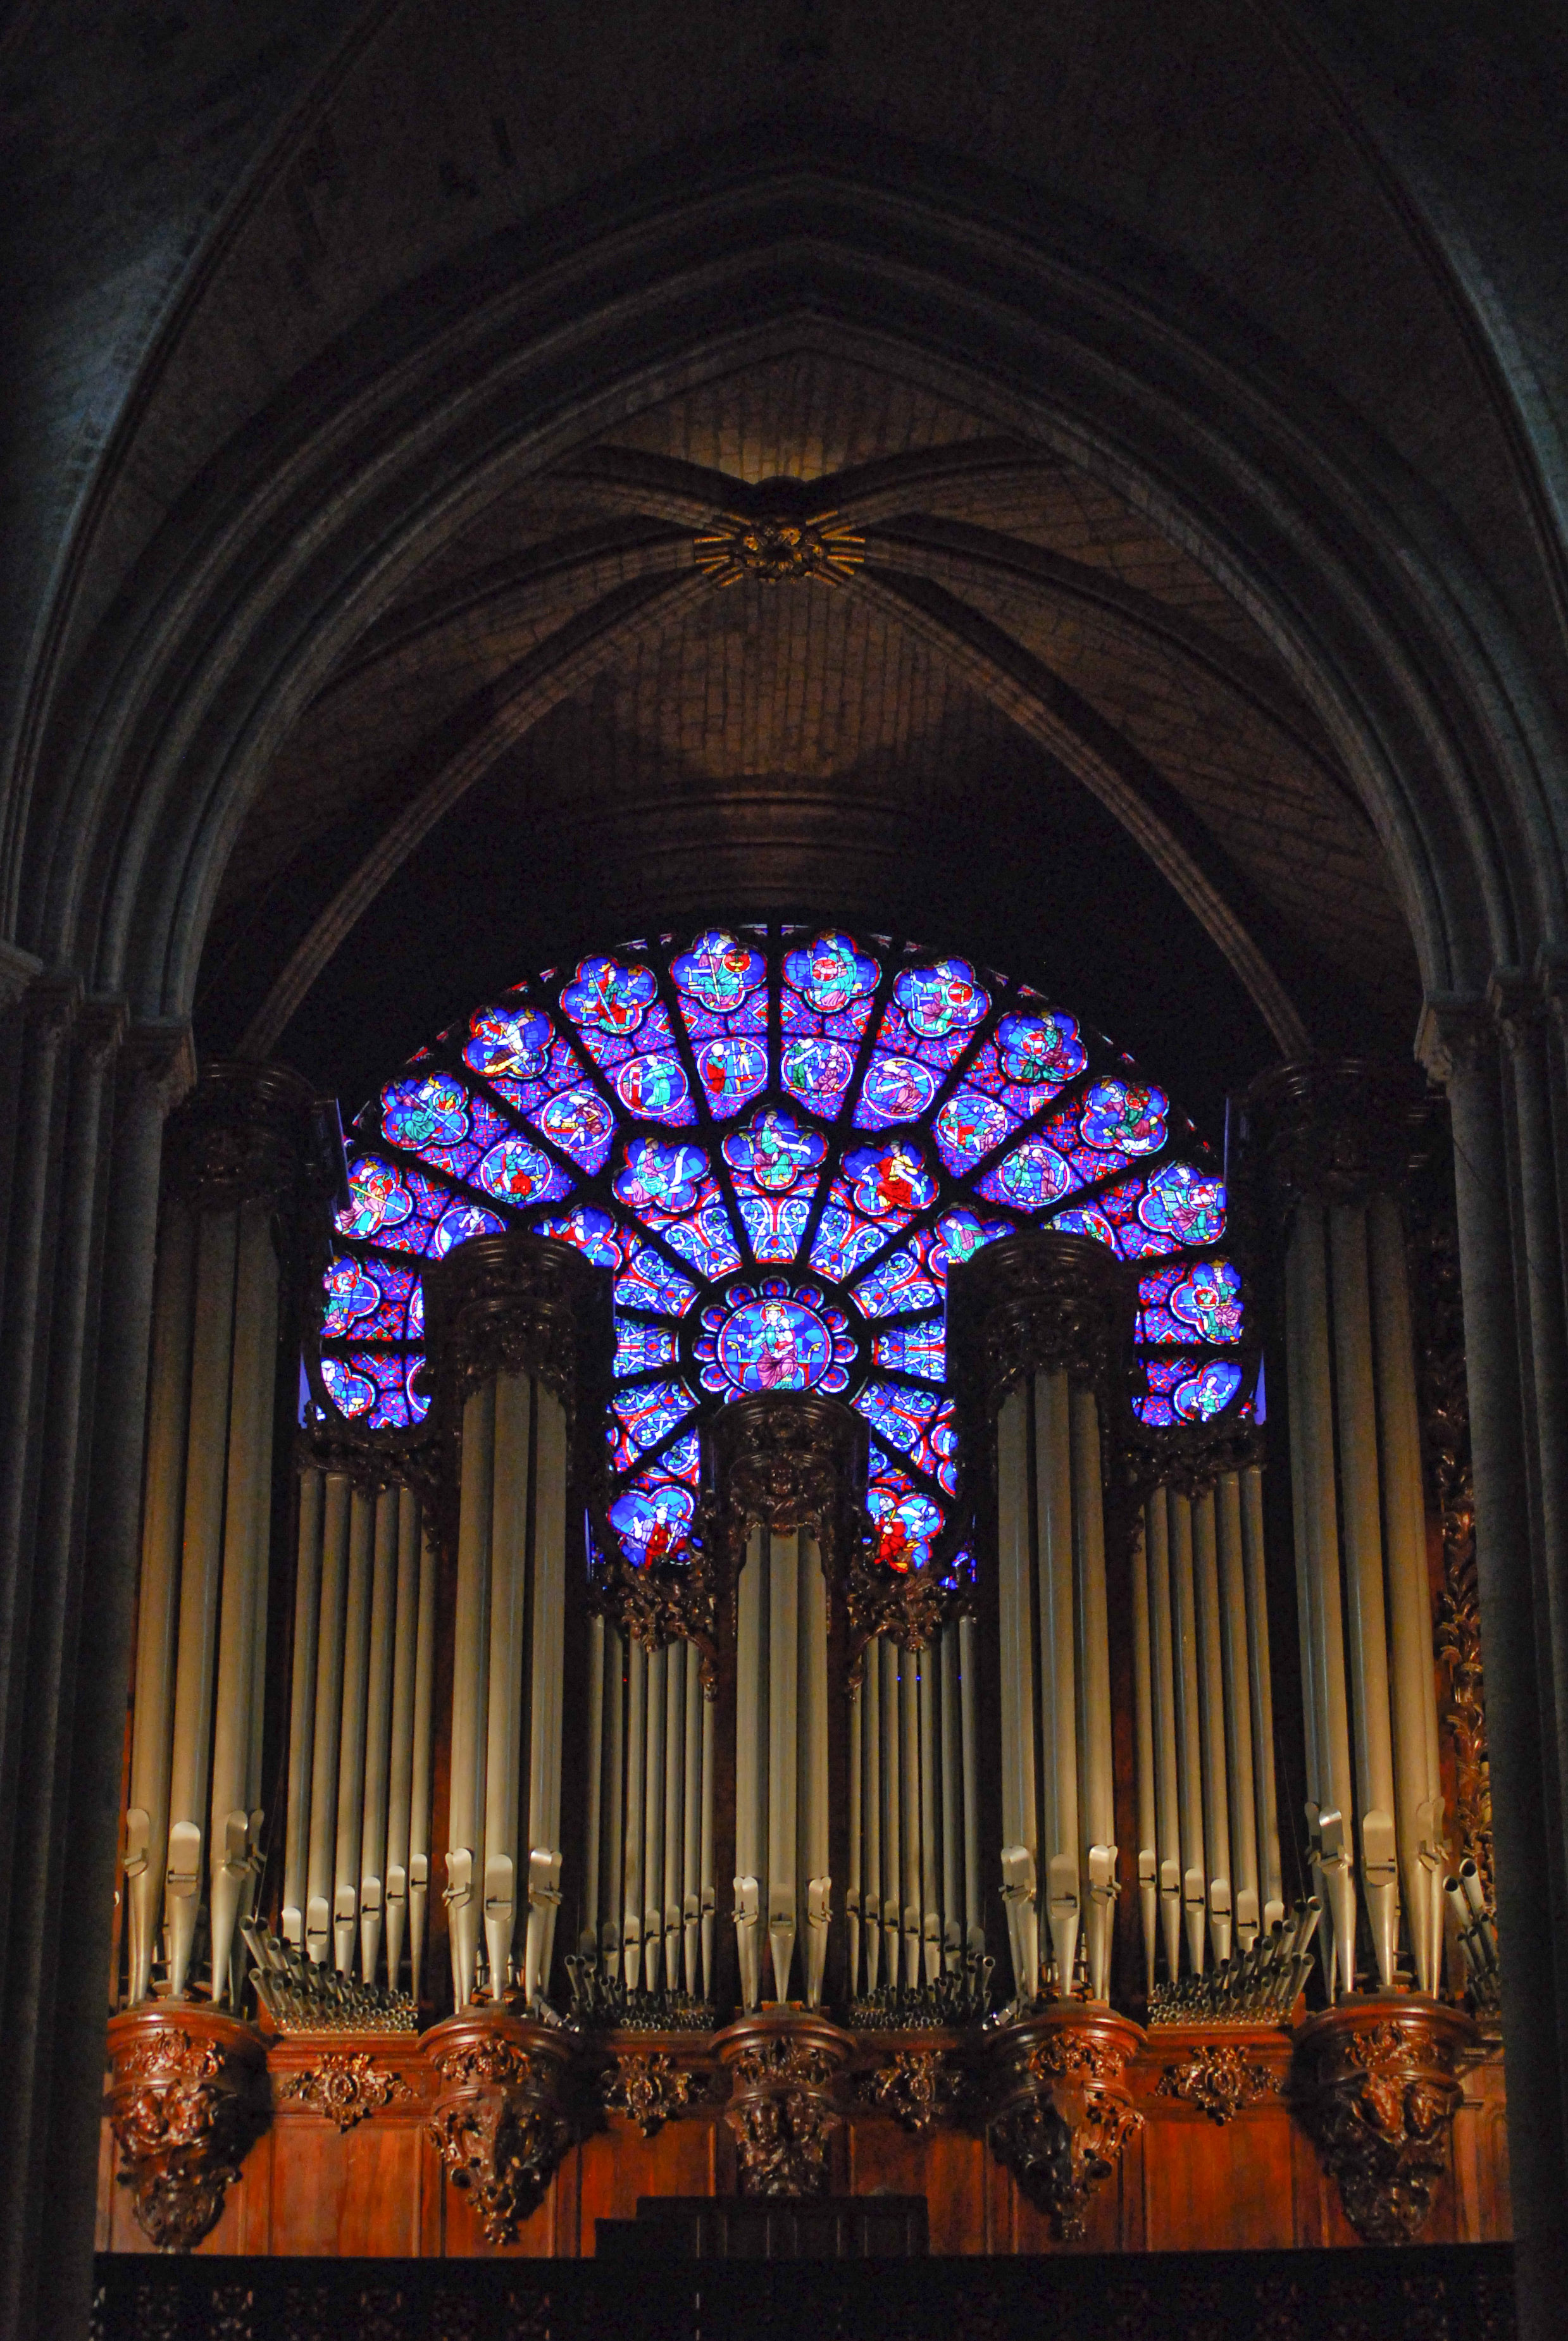 Organ of Notre dame de paris